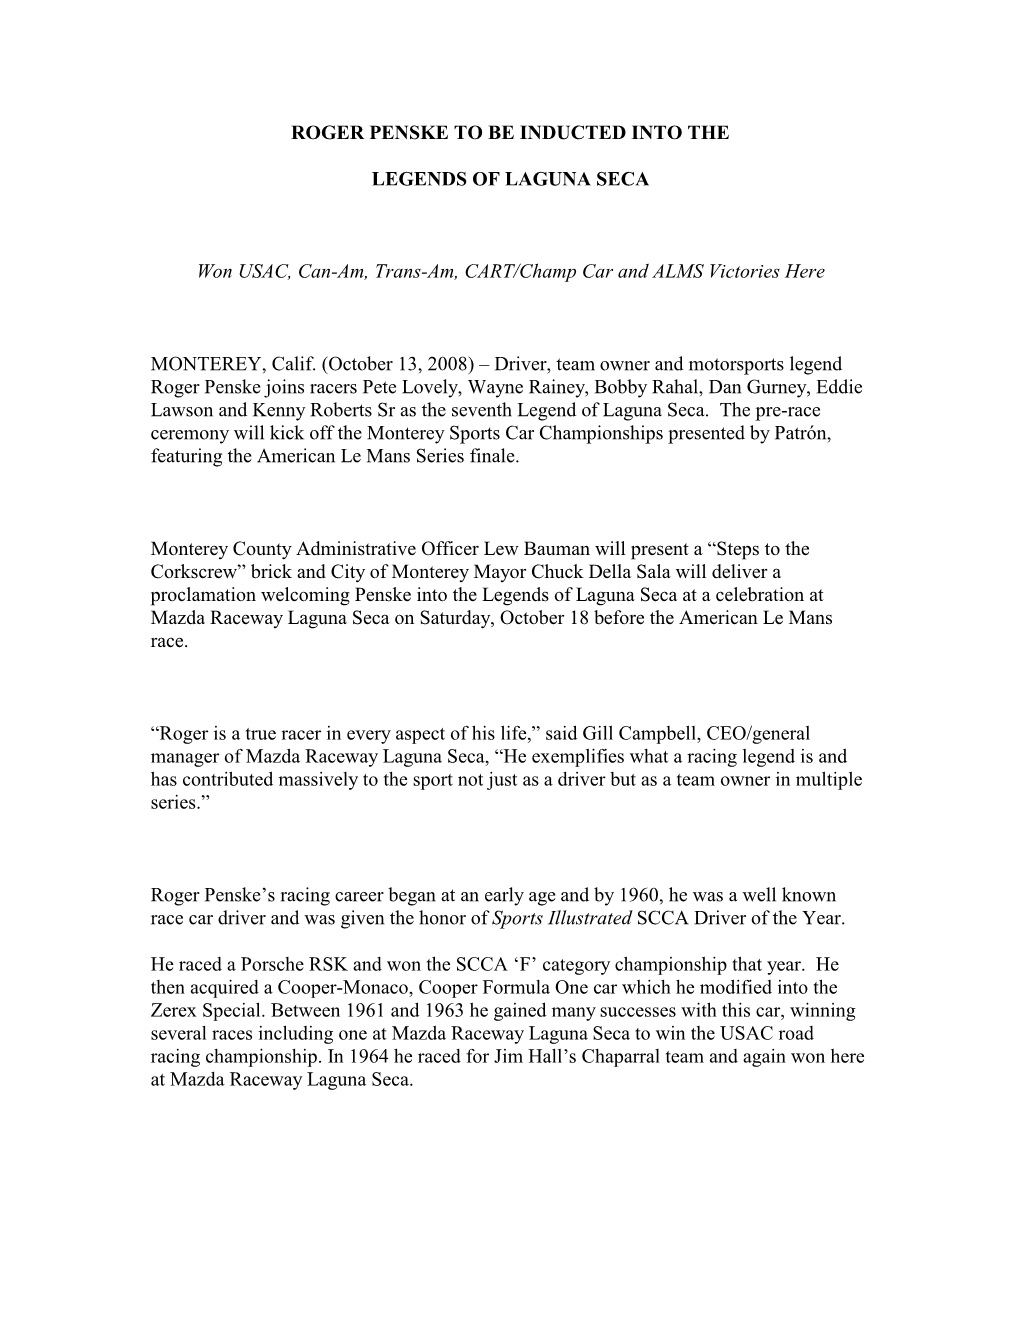 Roger Penske Seventh Legend of Laguna Seca 2008